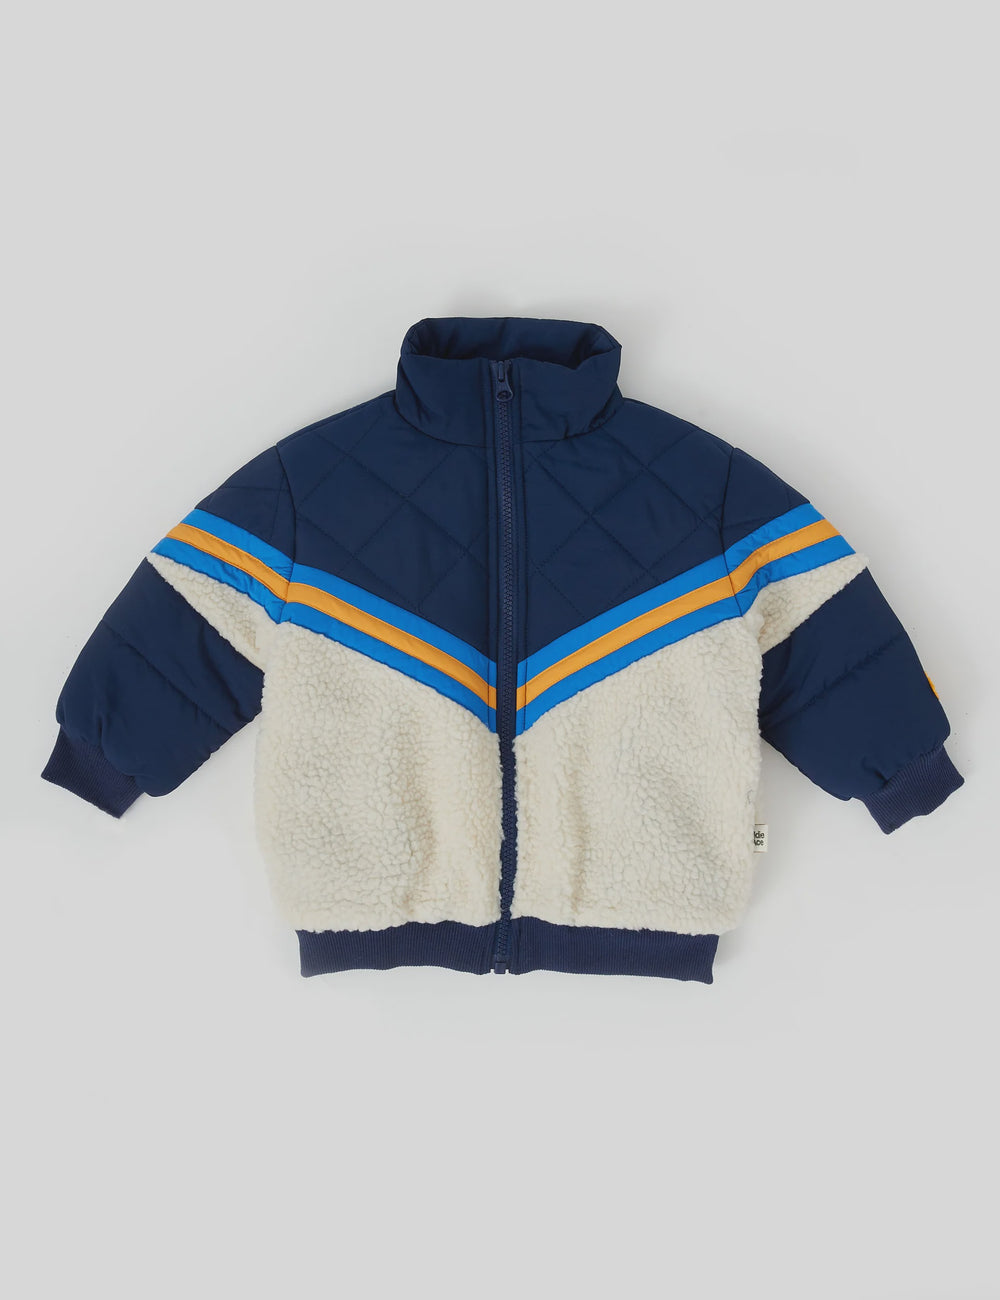 Kobe Shearling Jacket Navy